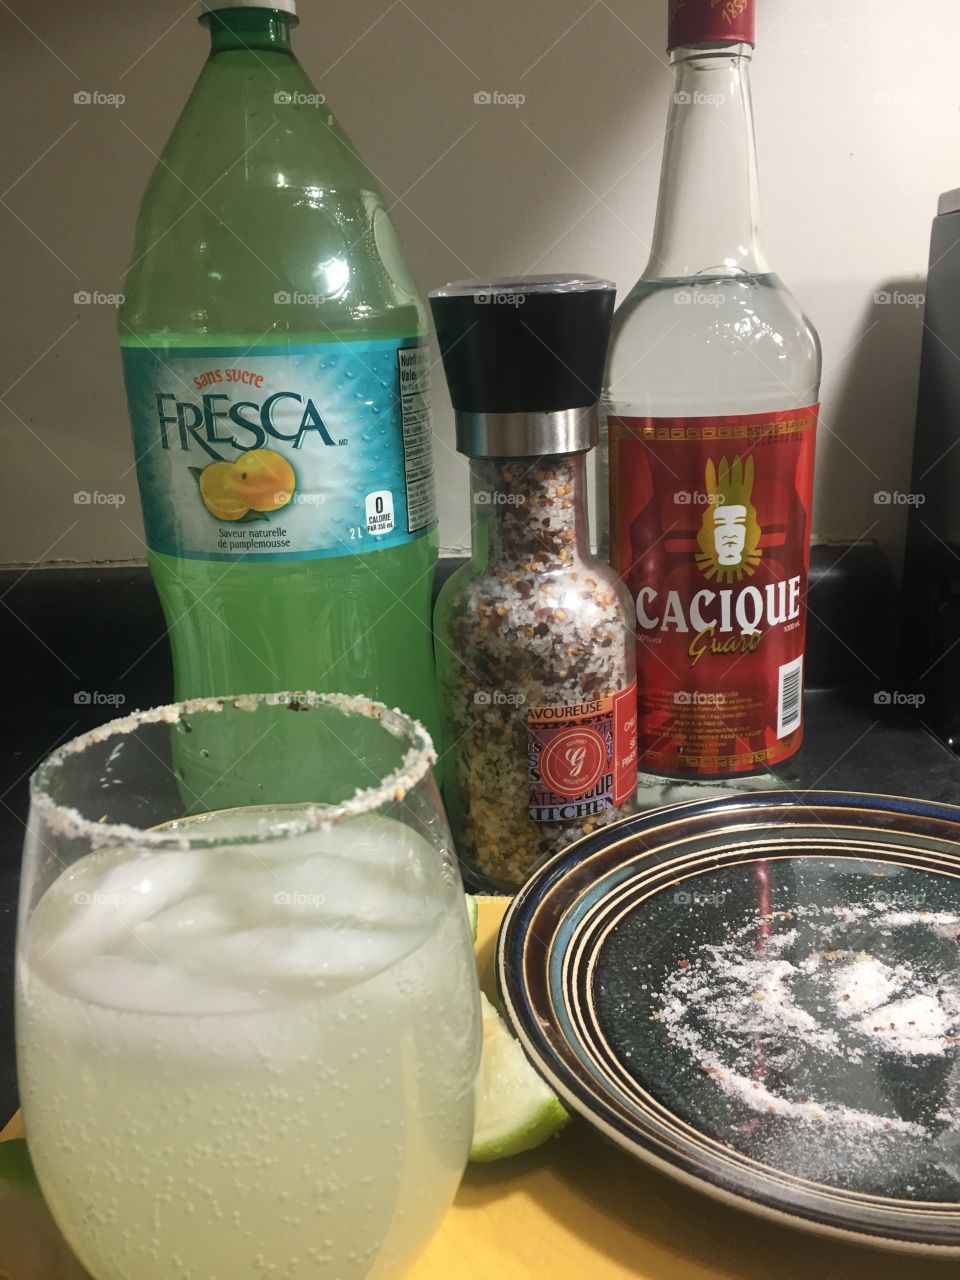 Fresca guaro drink